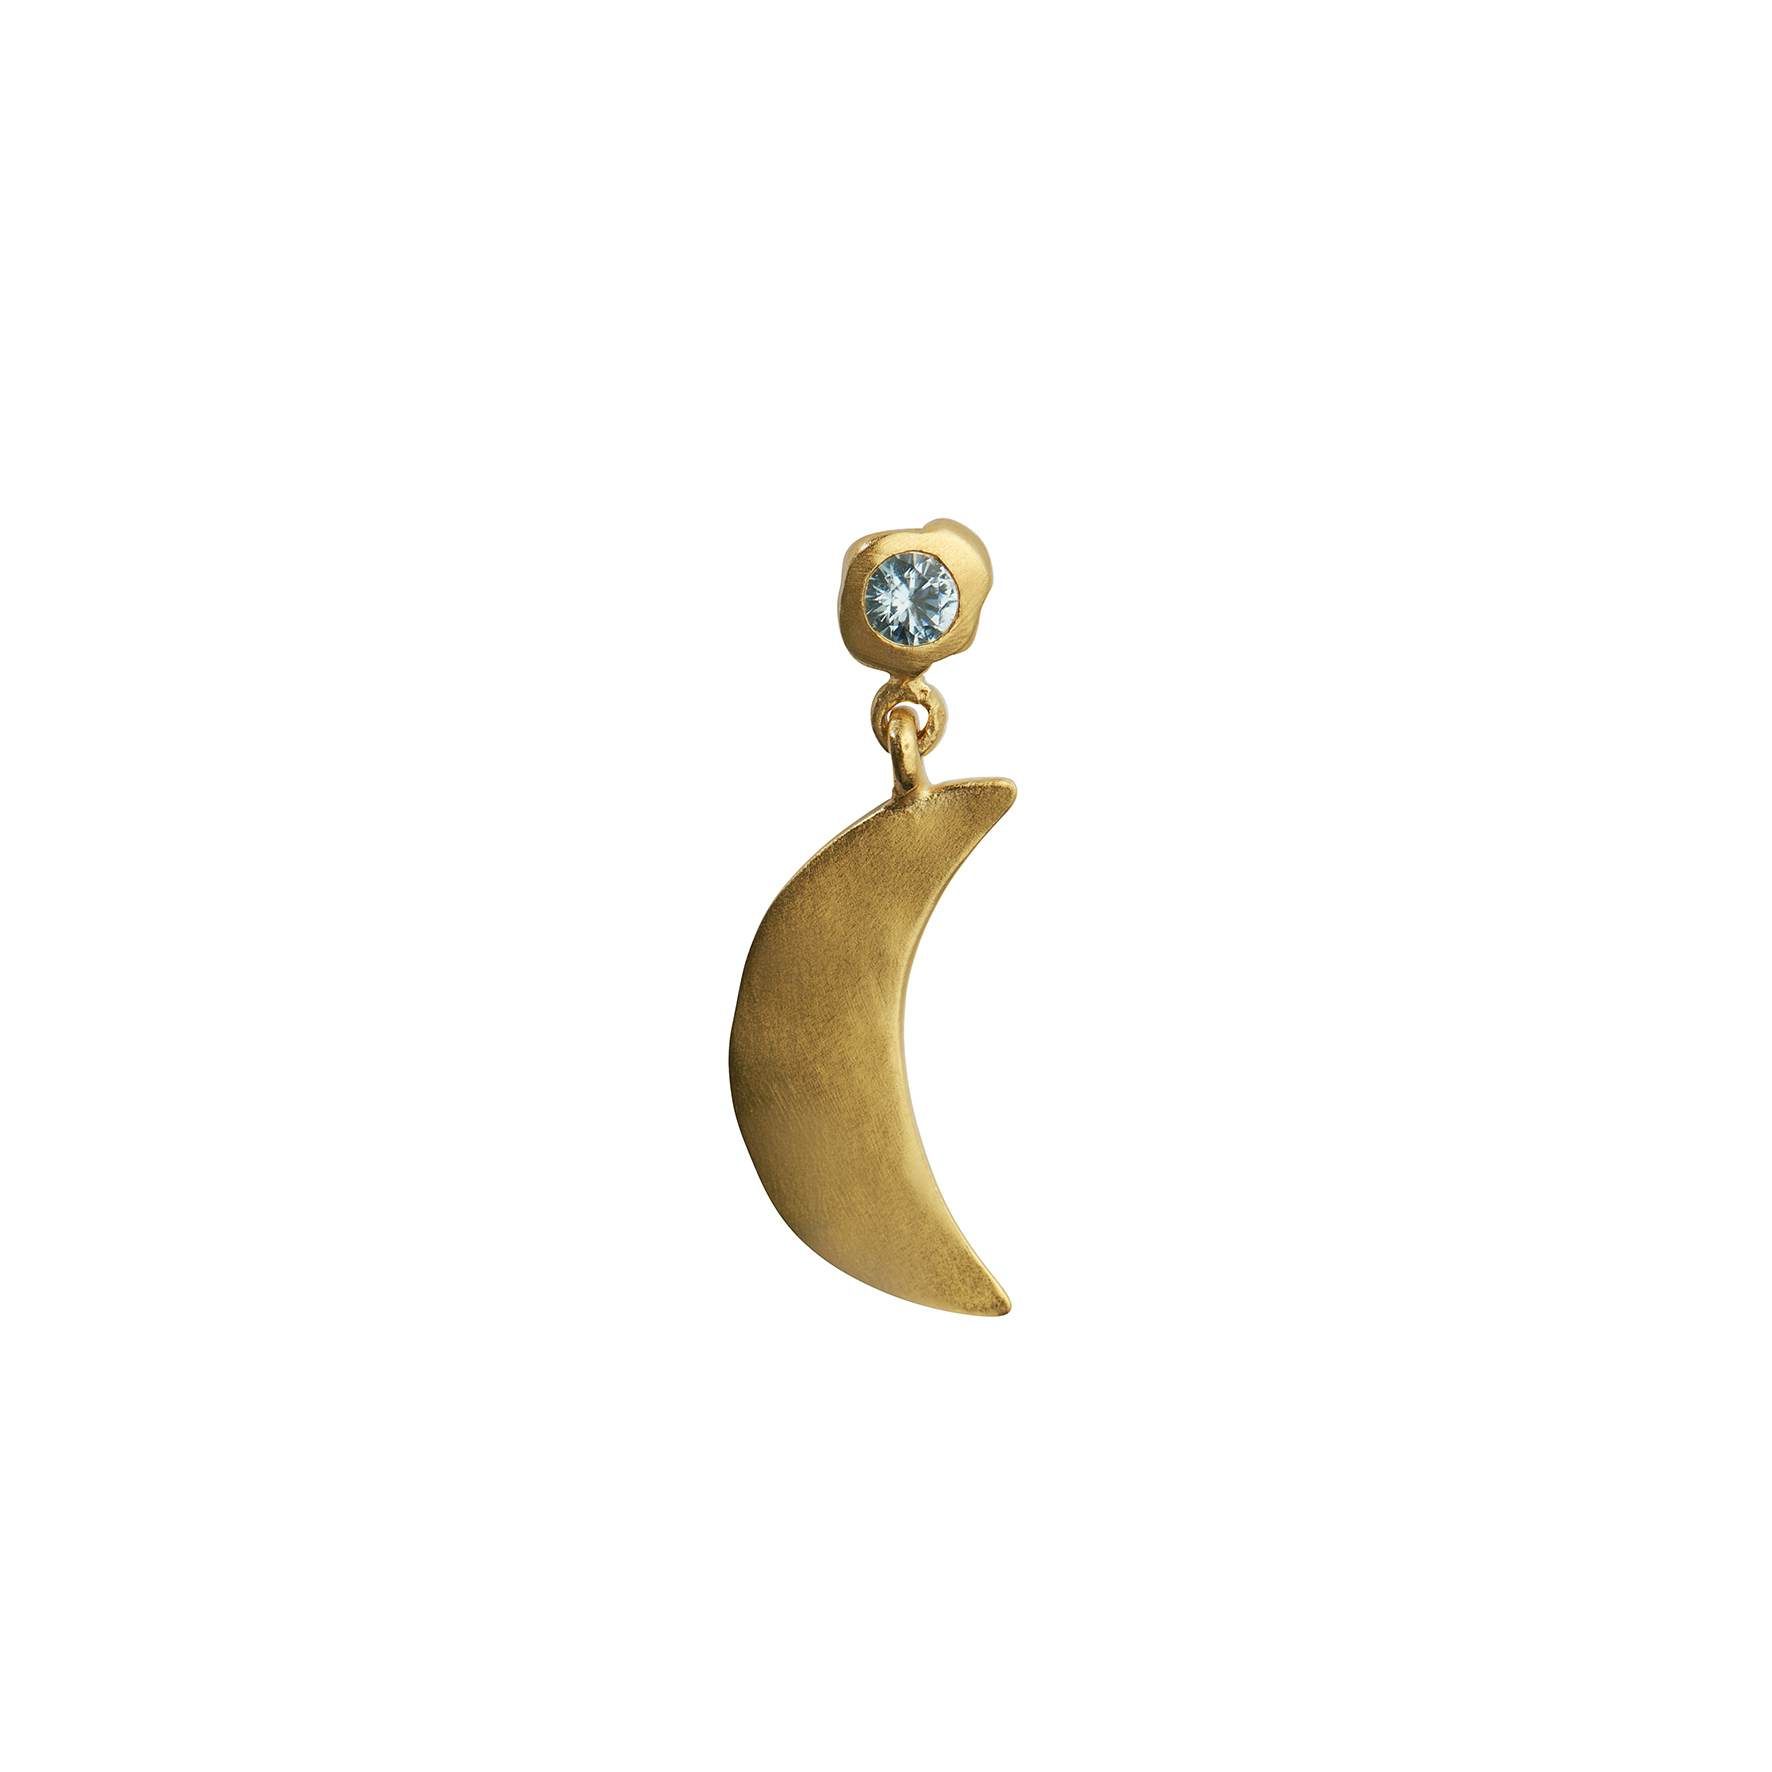 Big Dot Bella Moon with Blue Lagune Stone van STINE A Jewelry in Verguld-Zilver Sterling 925